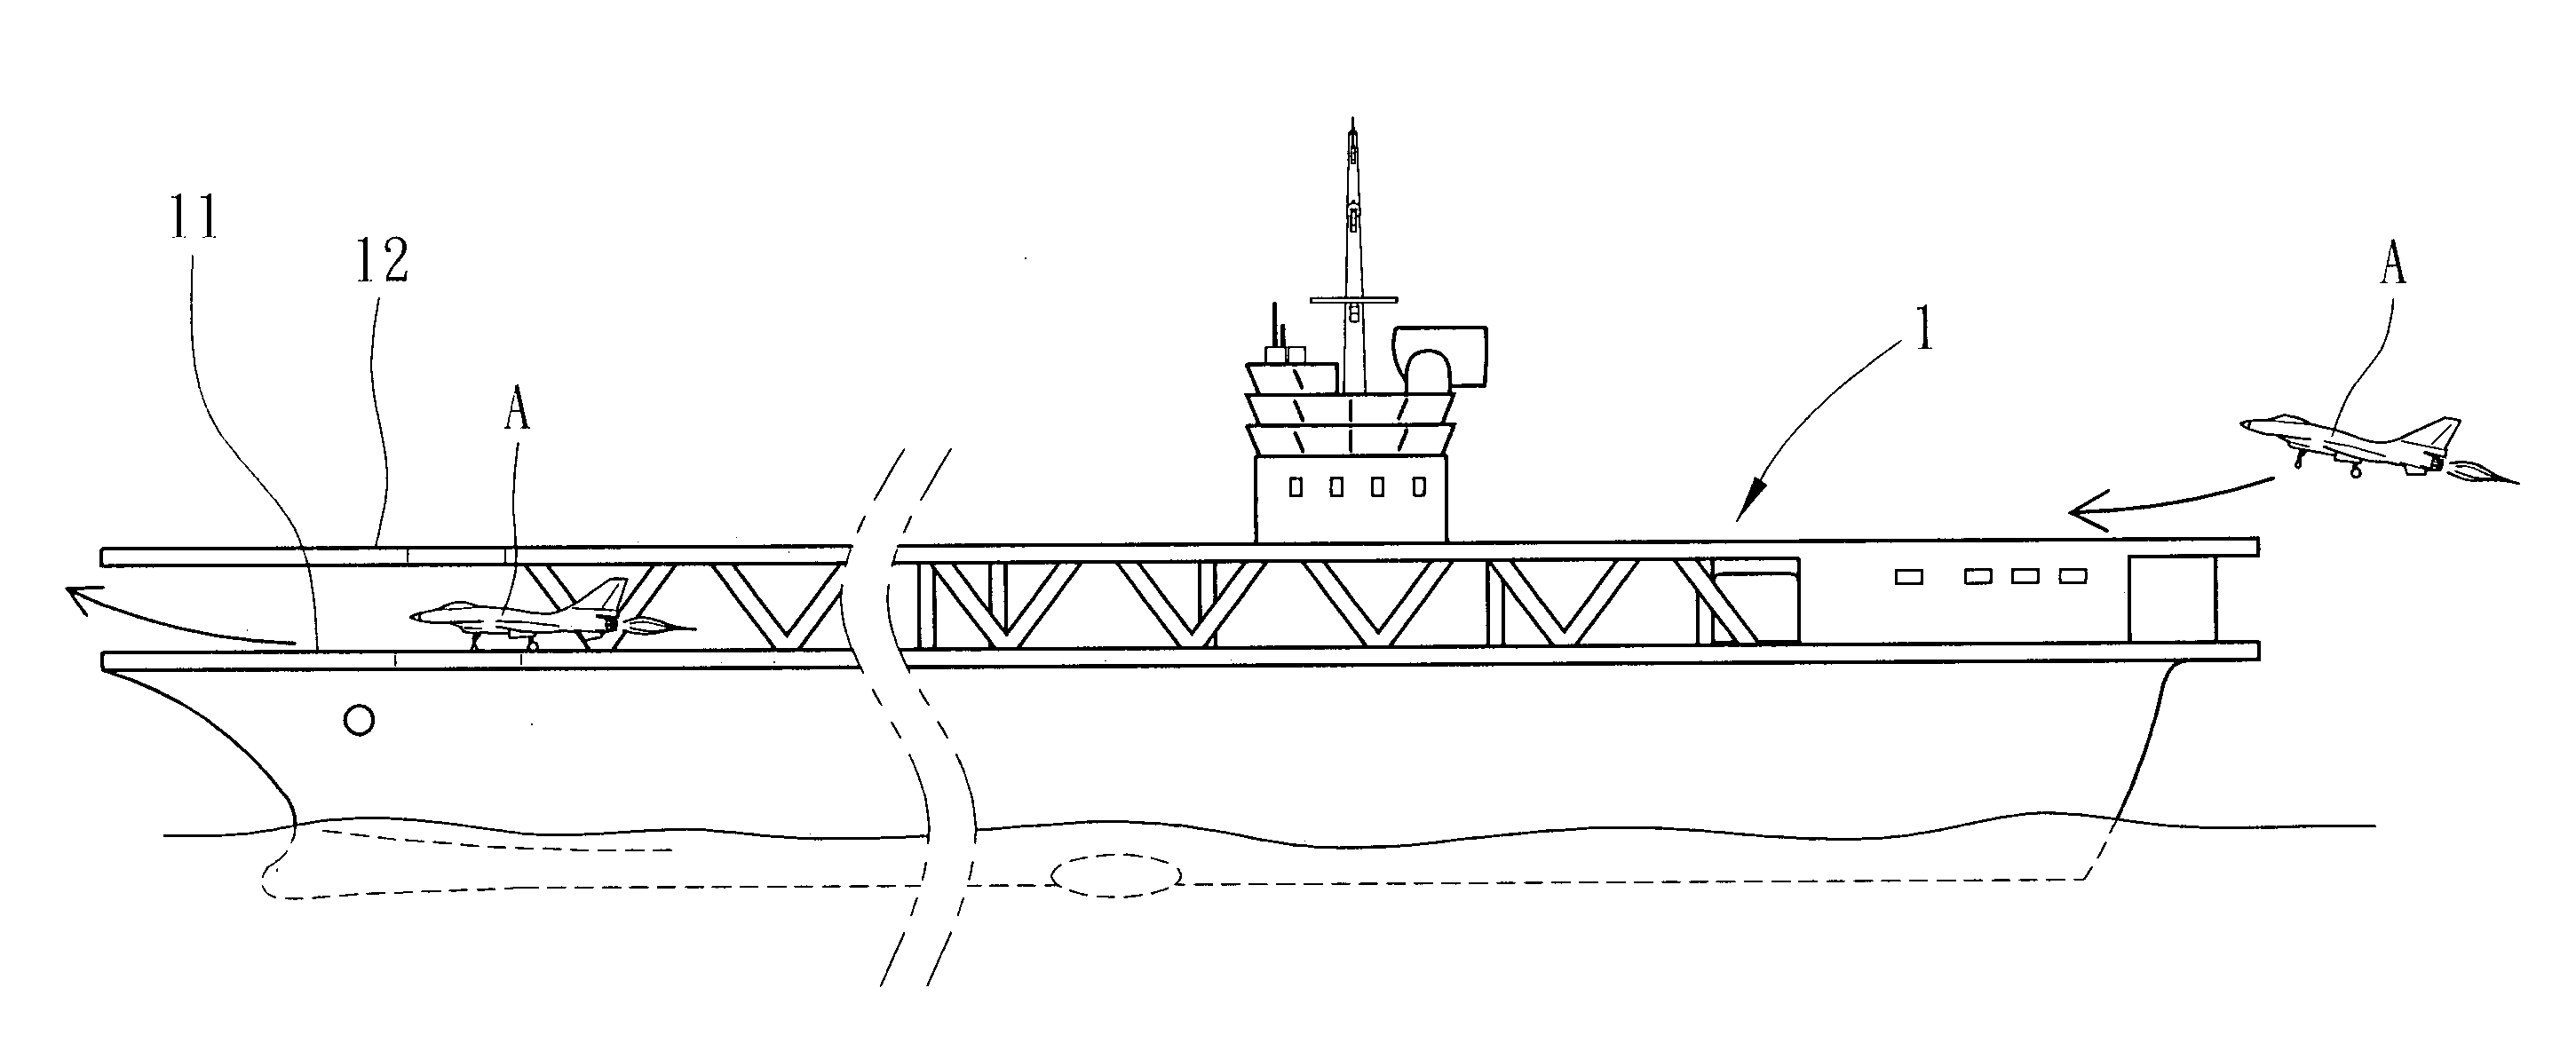 Double level flight deck type aircraft carrier